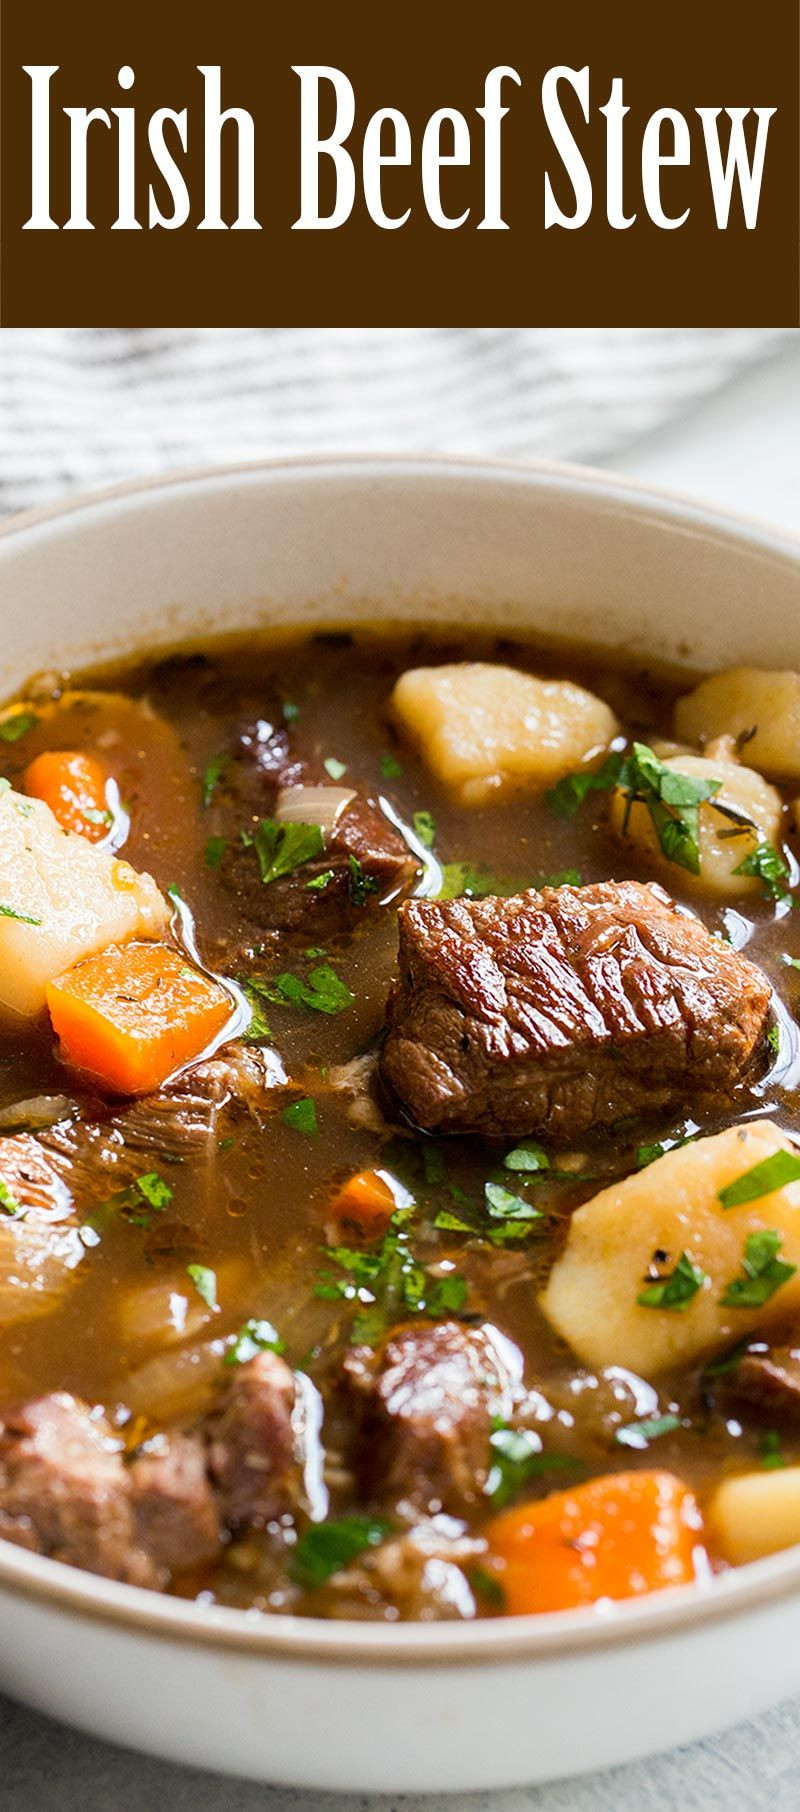 Irish Lamb Stew Recipes
 Irish Beef Stew Recipe in 2019